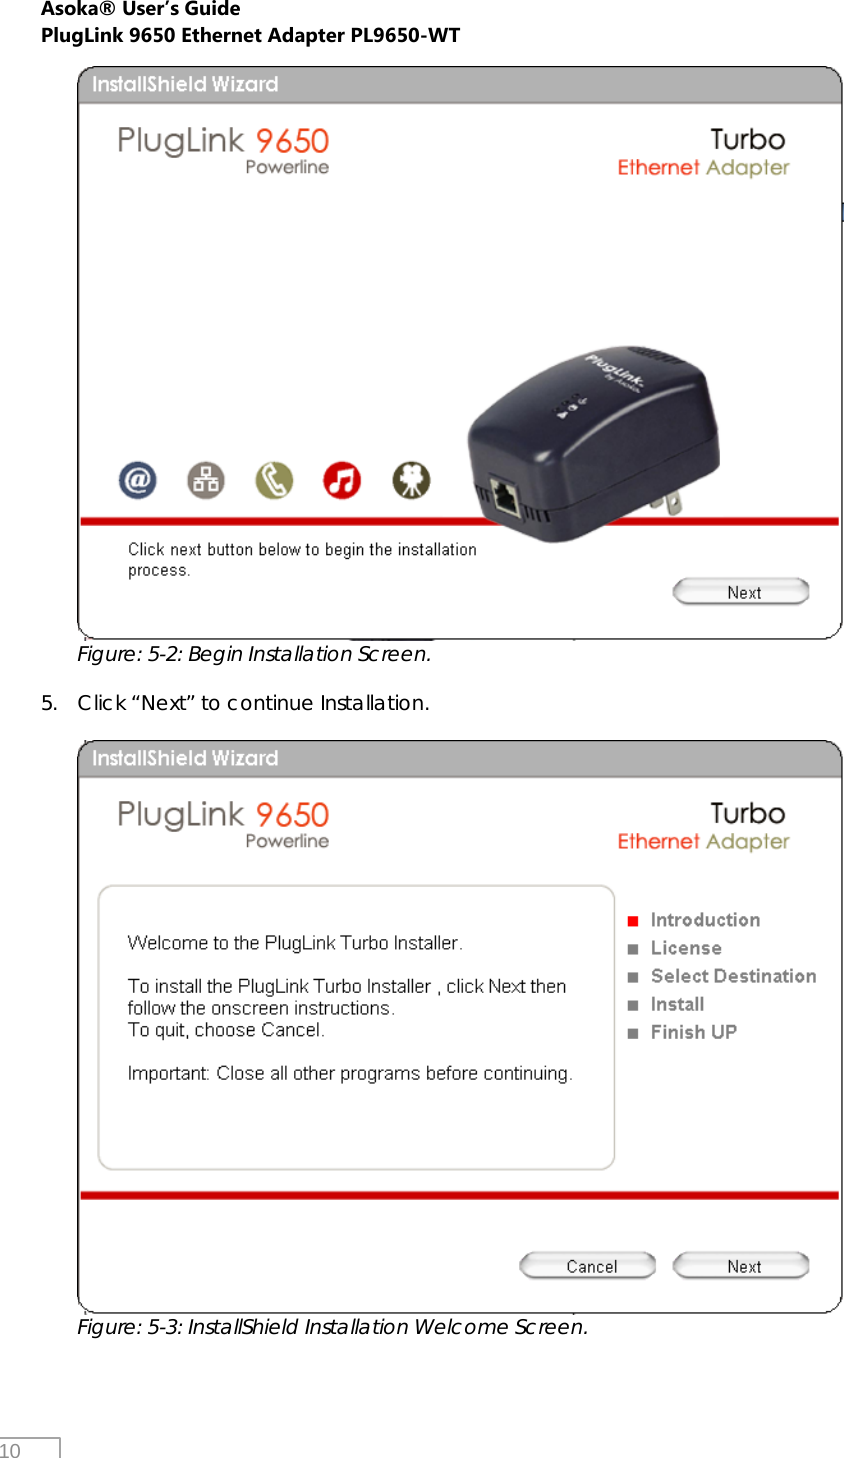 Asoka® User’s Guide PlugLink 9650 Ethernet Adapter PL9650-WT   10  Figure: 5-2: Begin Installation Screen.  5. Click “Next” to continue Installation.   Figure: 5-3: InstallShield Installation Welcome Screen.  